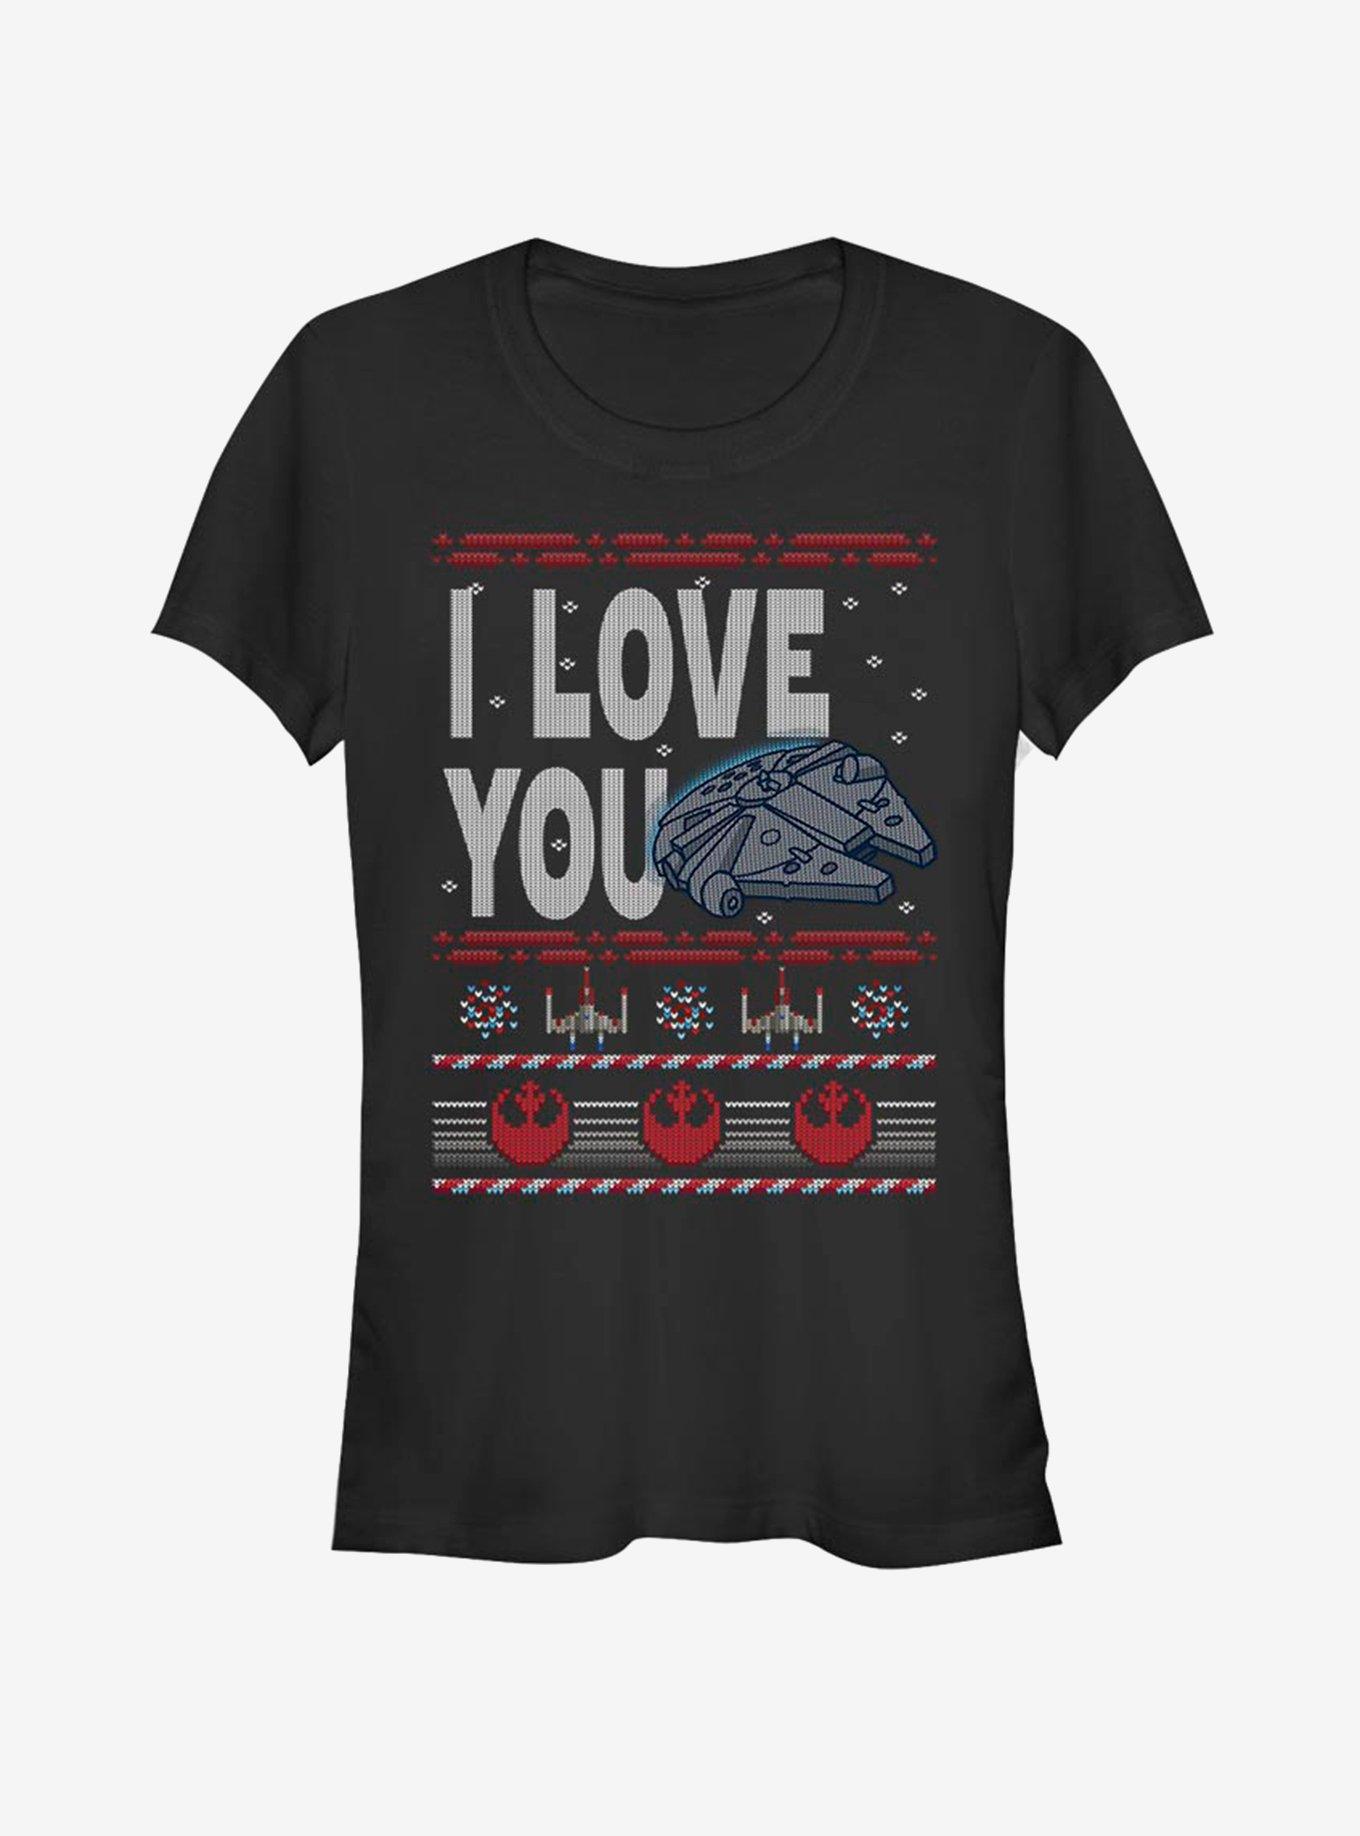 Star Wars Ugly Love Girls T-Shirt, BLACK, hi-res